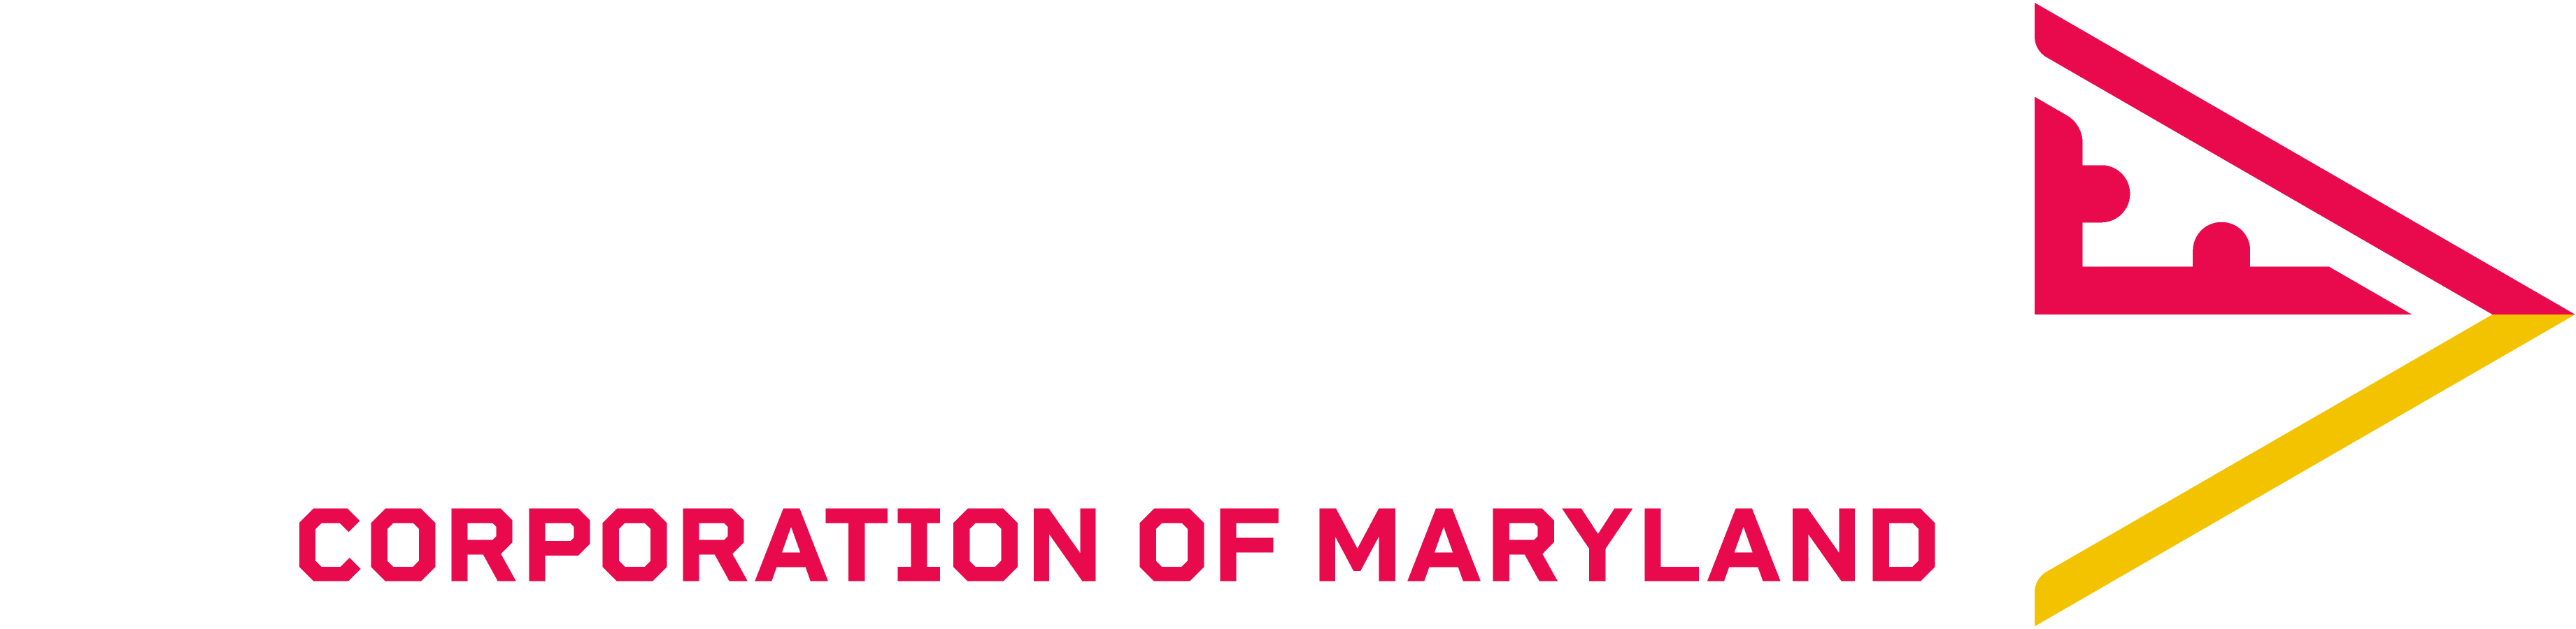 Sport & Entertainment Corporation of Maryland